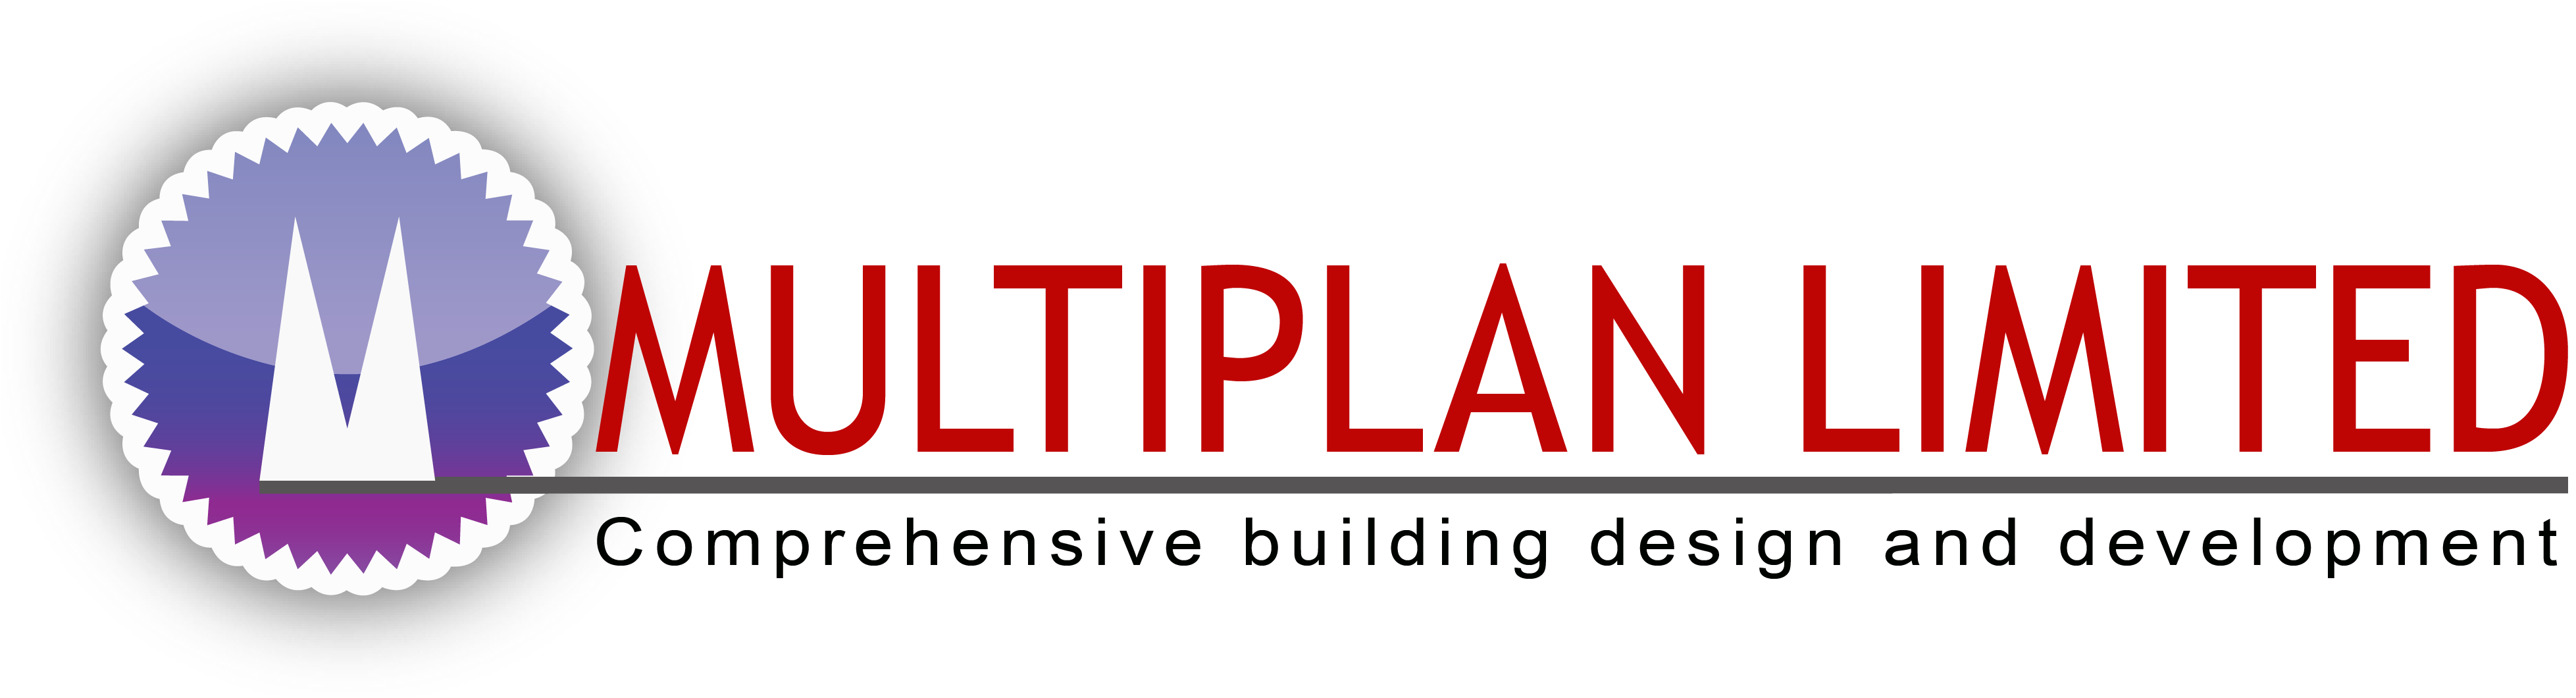 Multiplan Limited